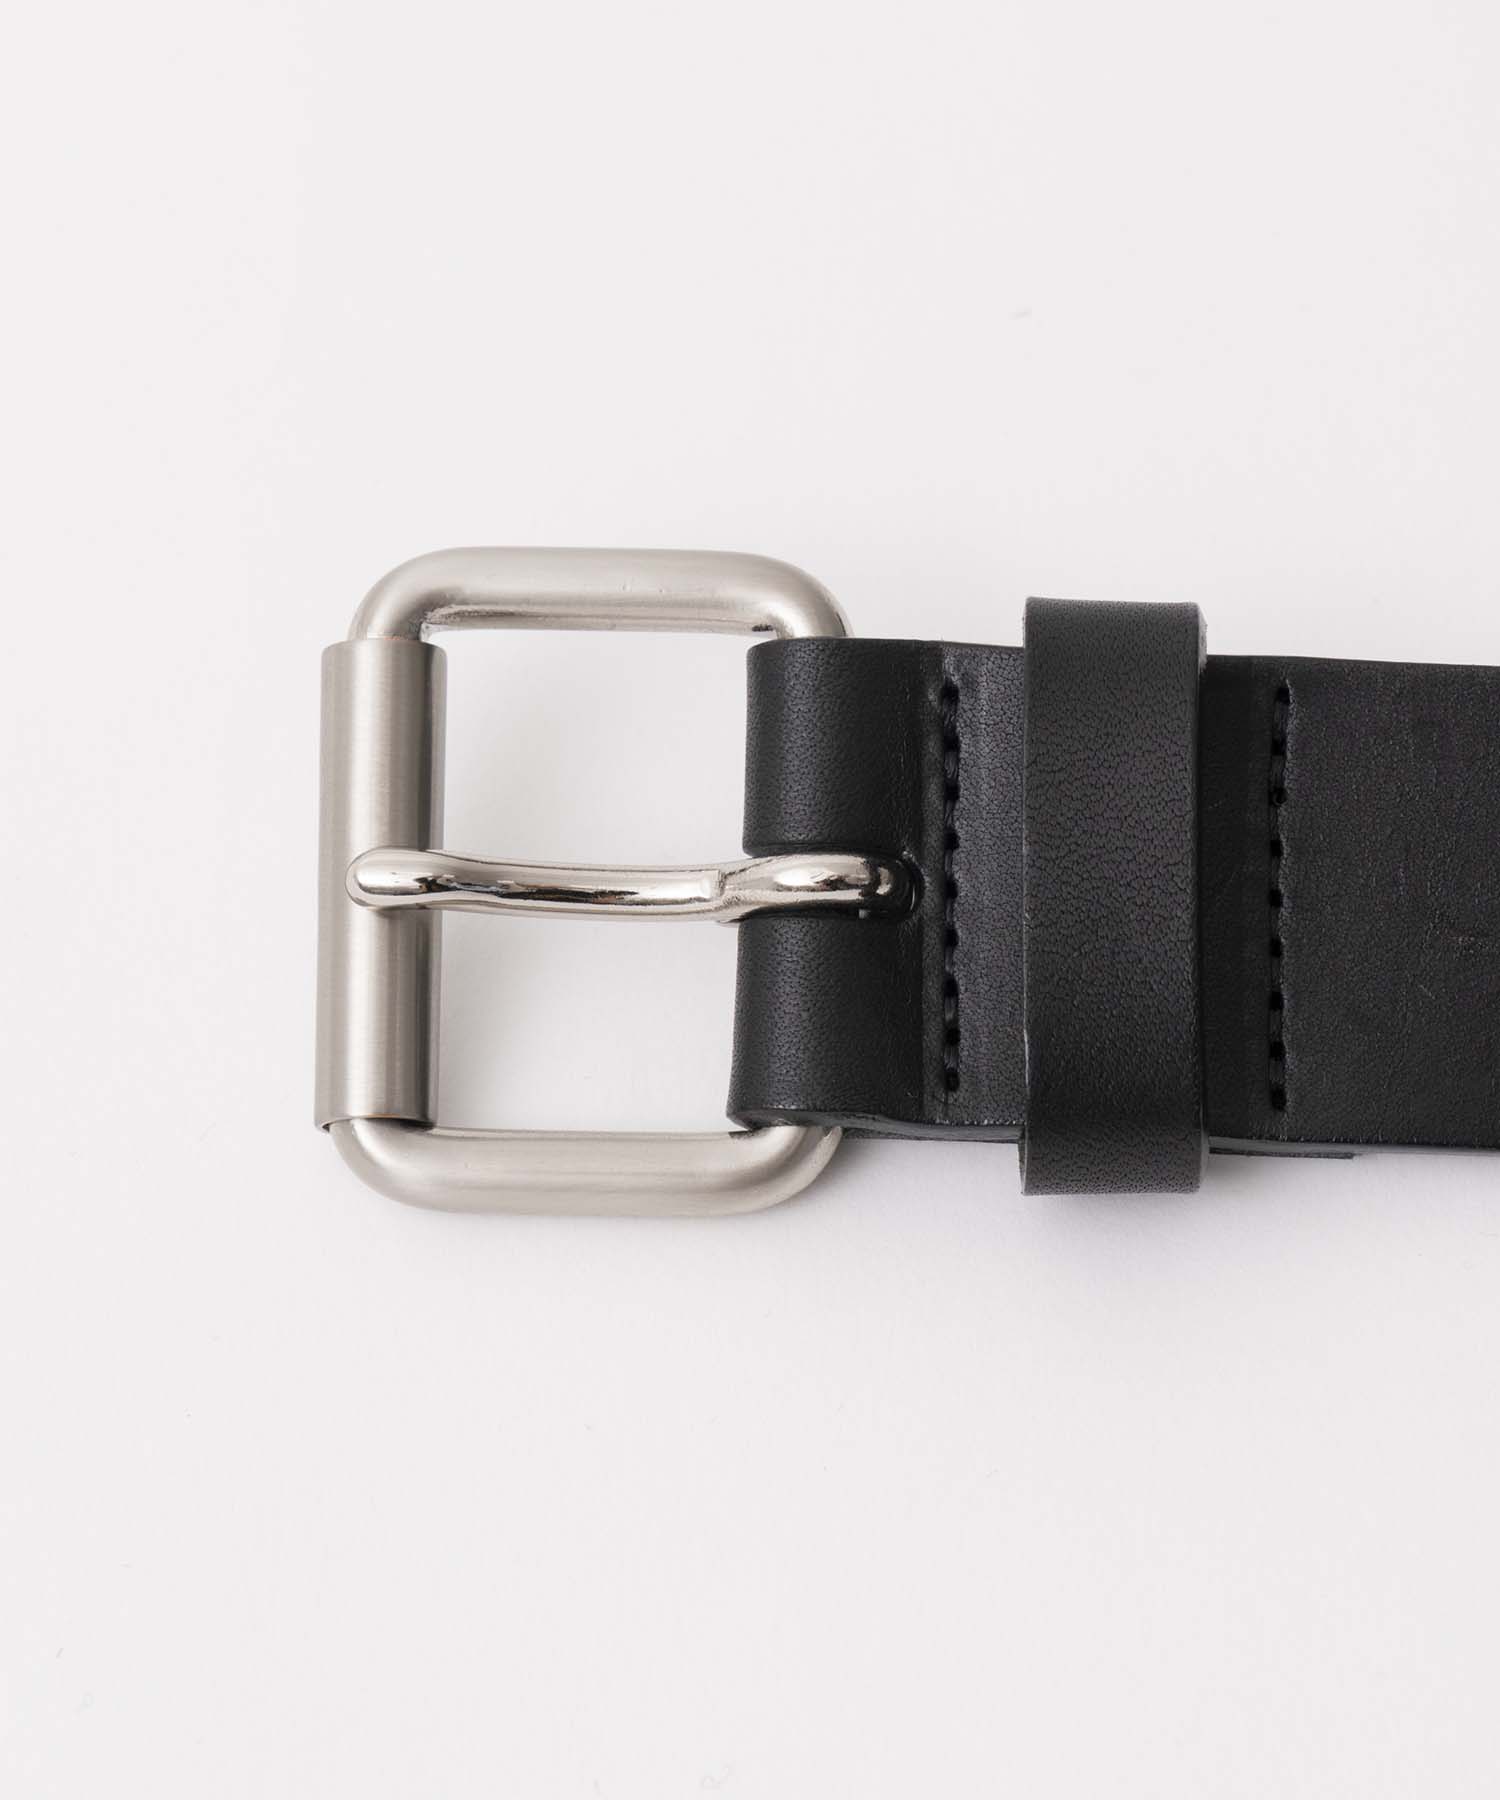 35mm Width Studs Leather Belt